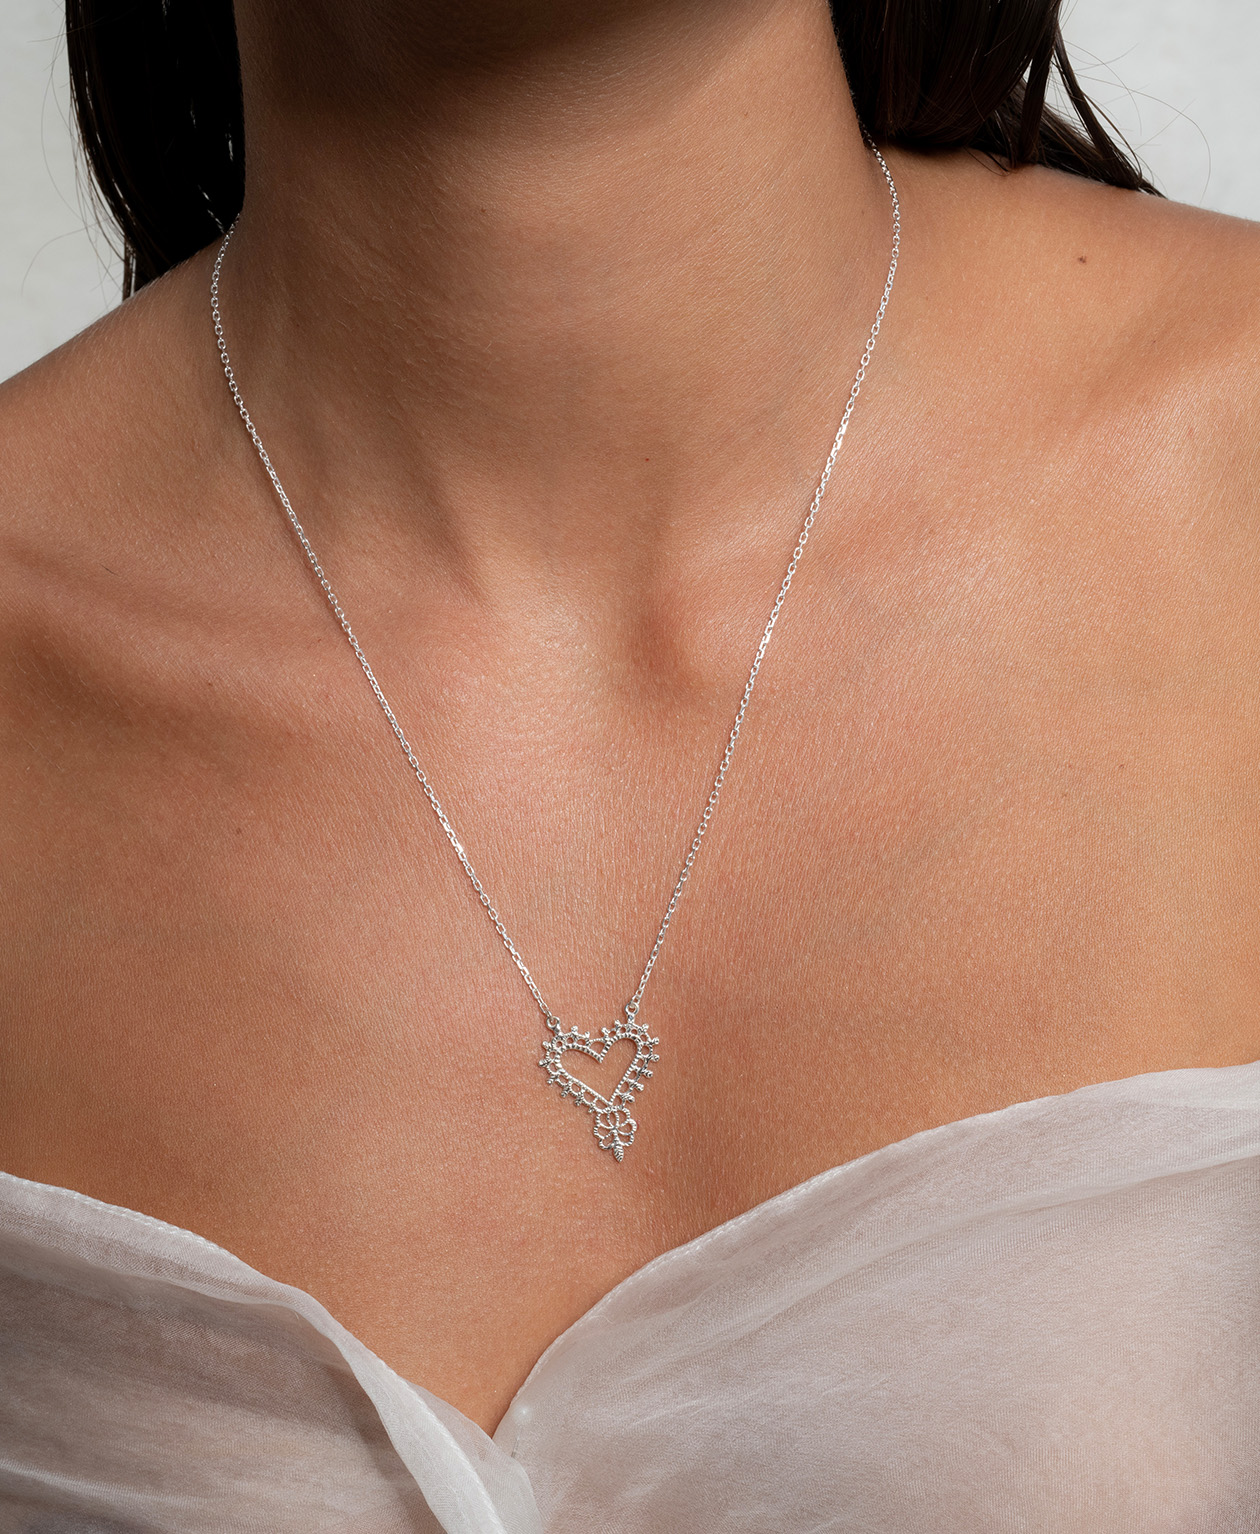 Zoe and Morgan  Silver Heart Necklace